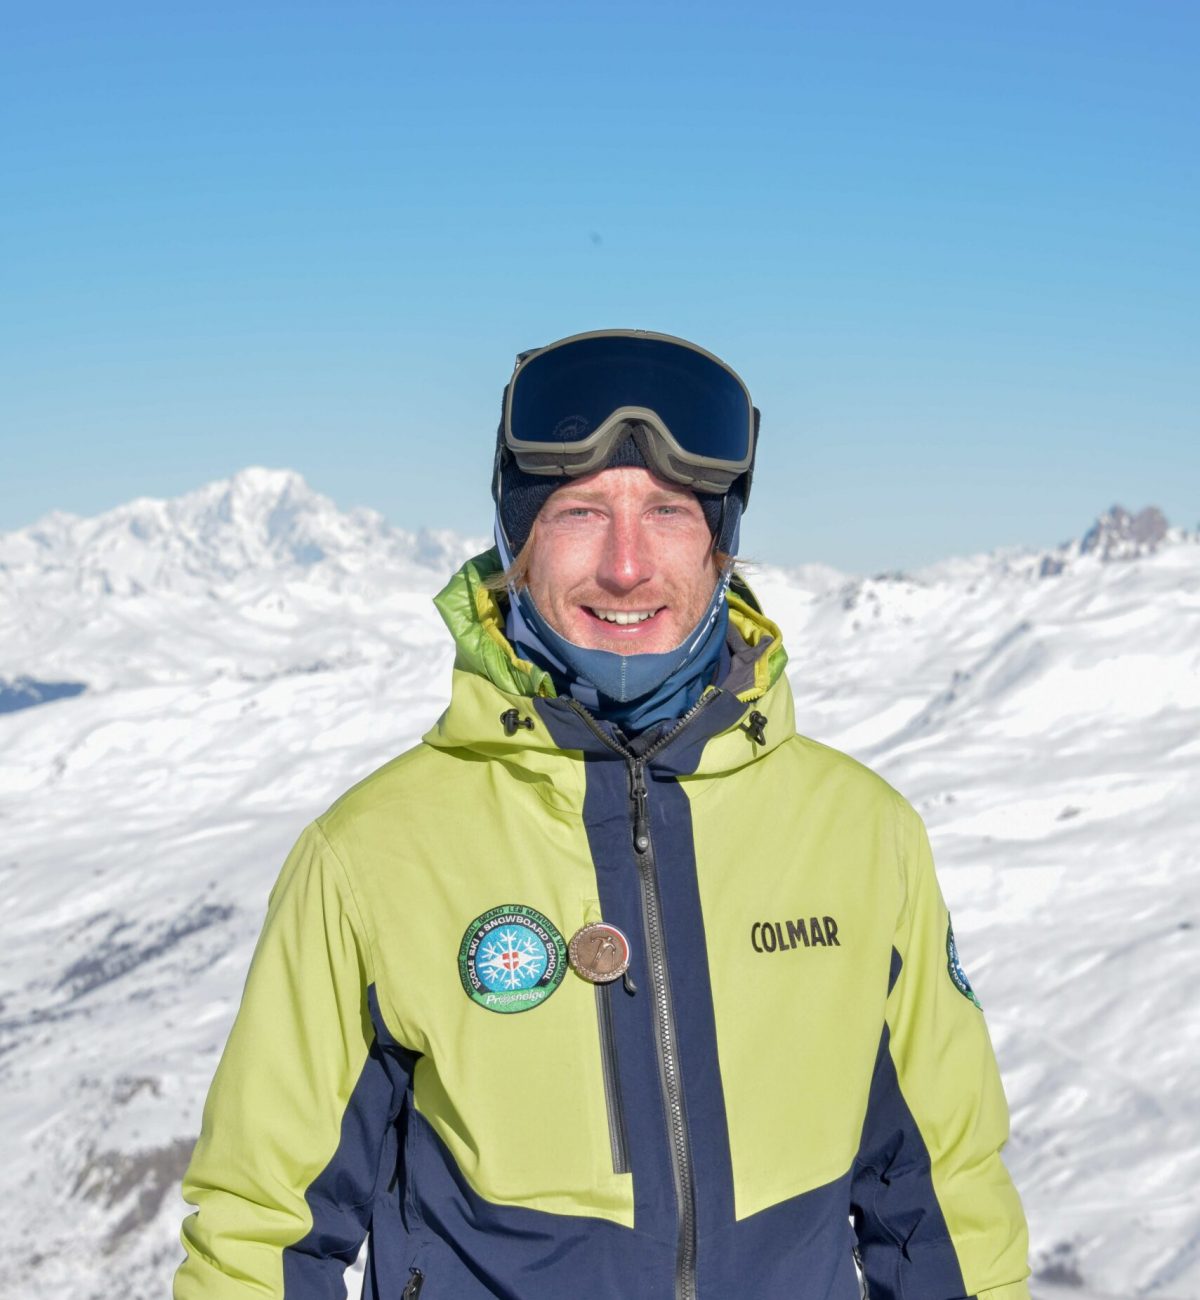 Alan-moniteur-ski-prosneige